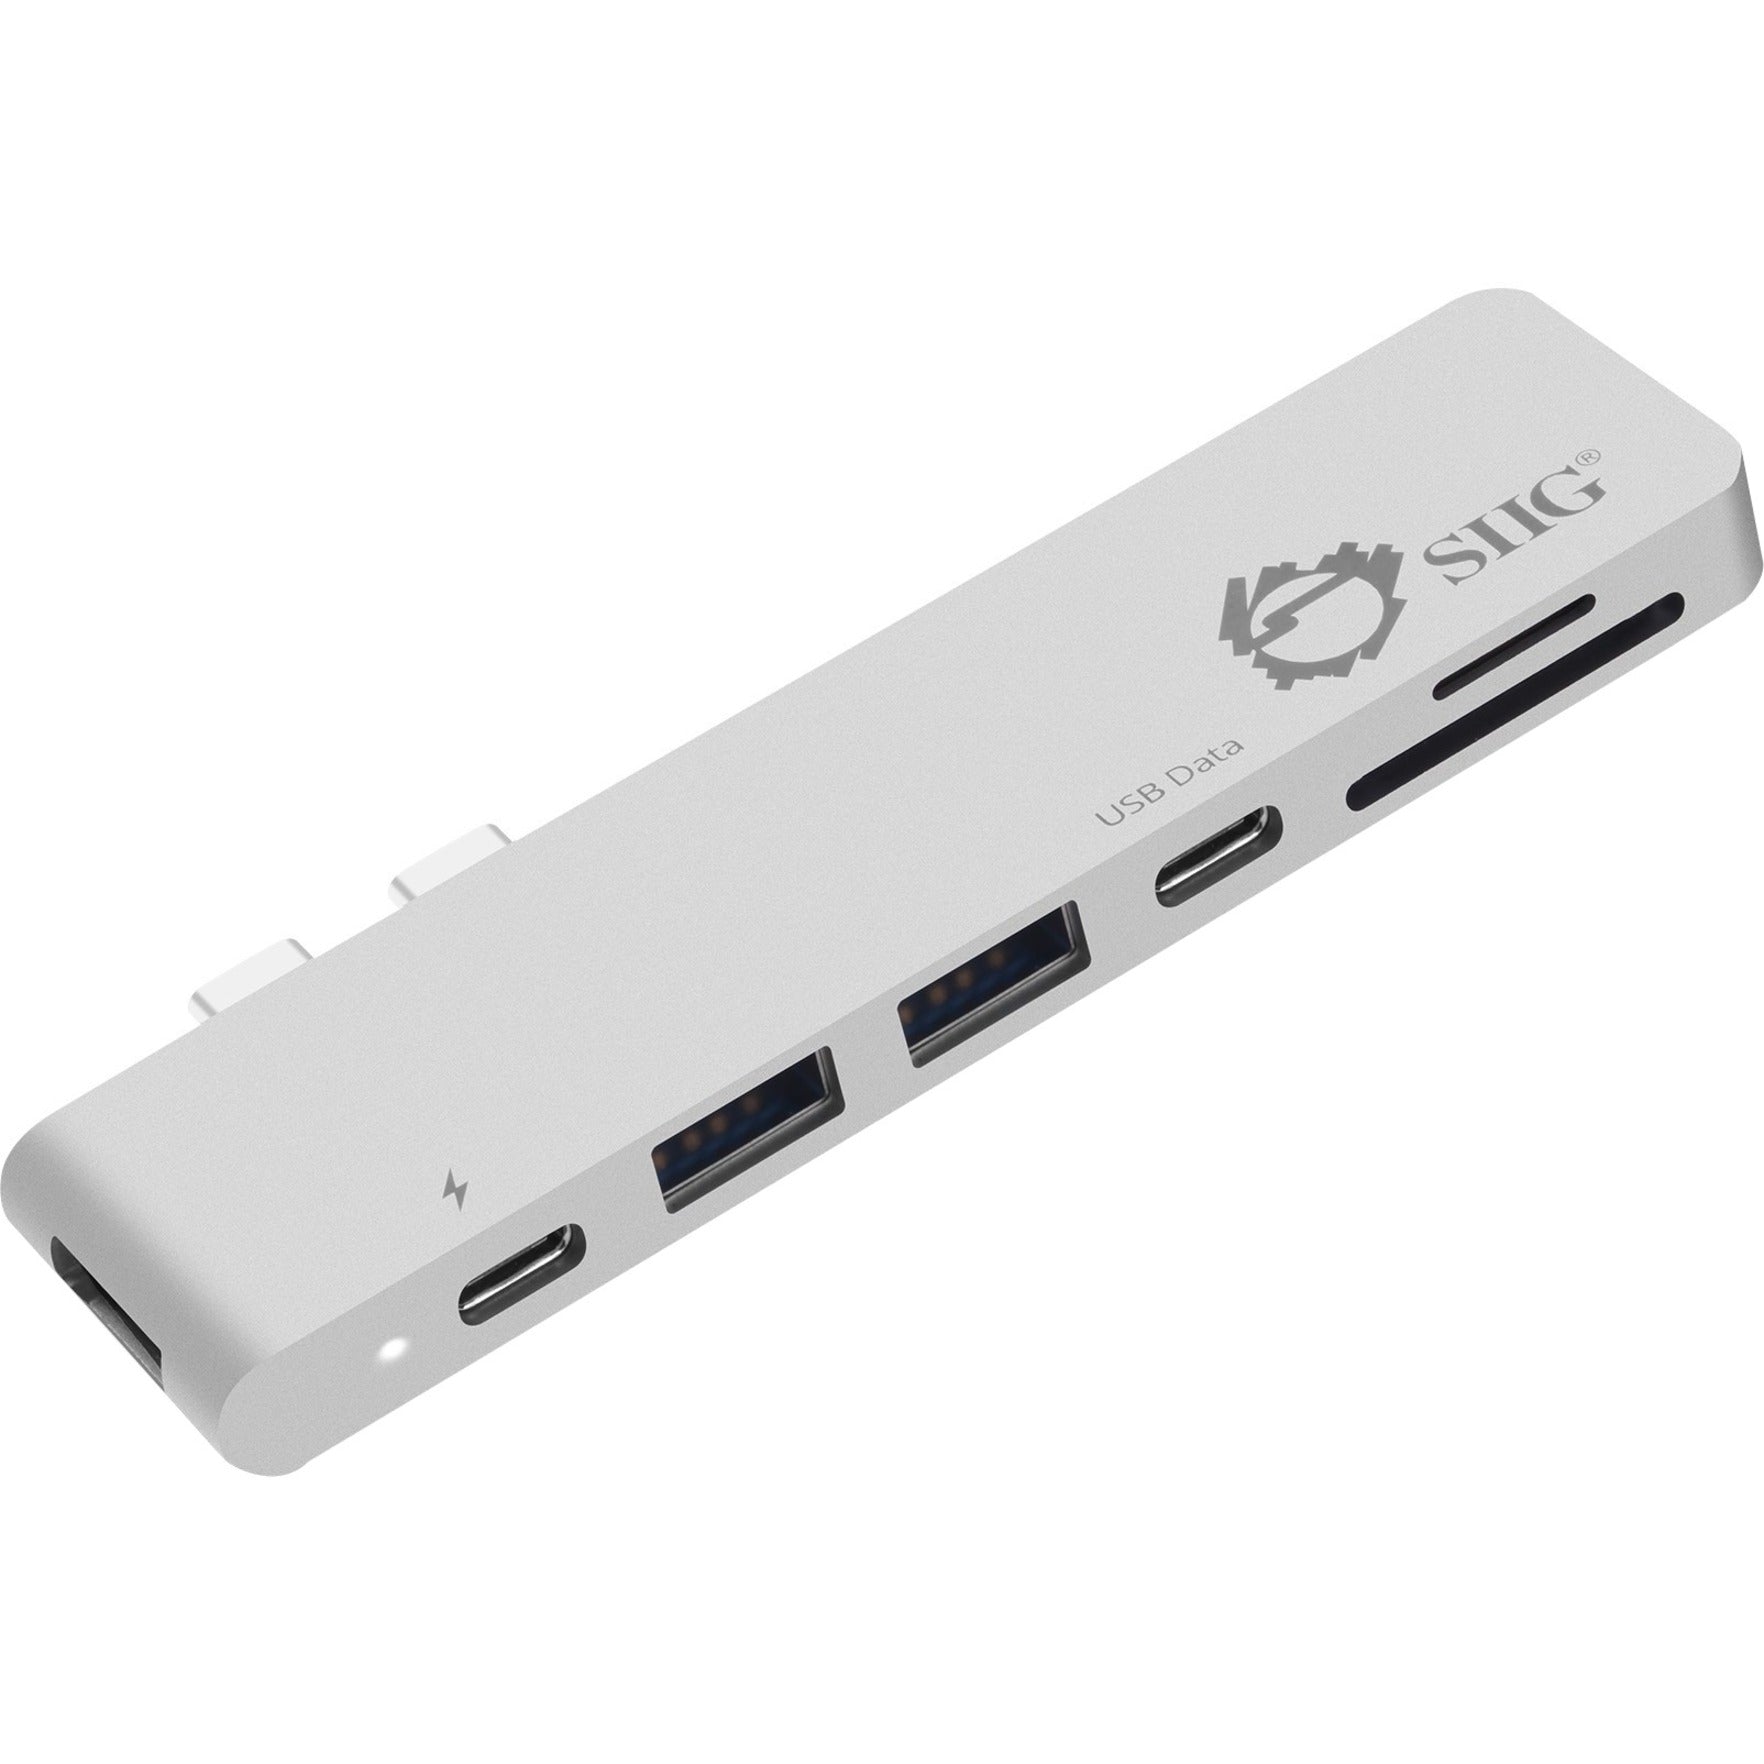 SIIG JU-TB0412-S1 Thunderbolt 3 USB-C Hub HDMI with Card Reader & PD Adapter - Silver, 2 Year Warranty, USB Type C